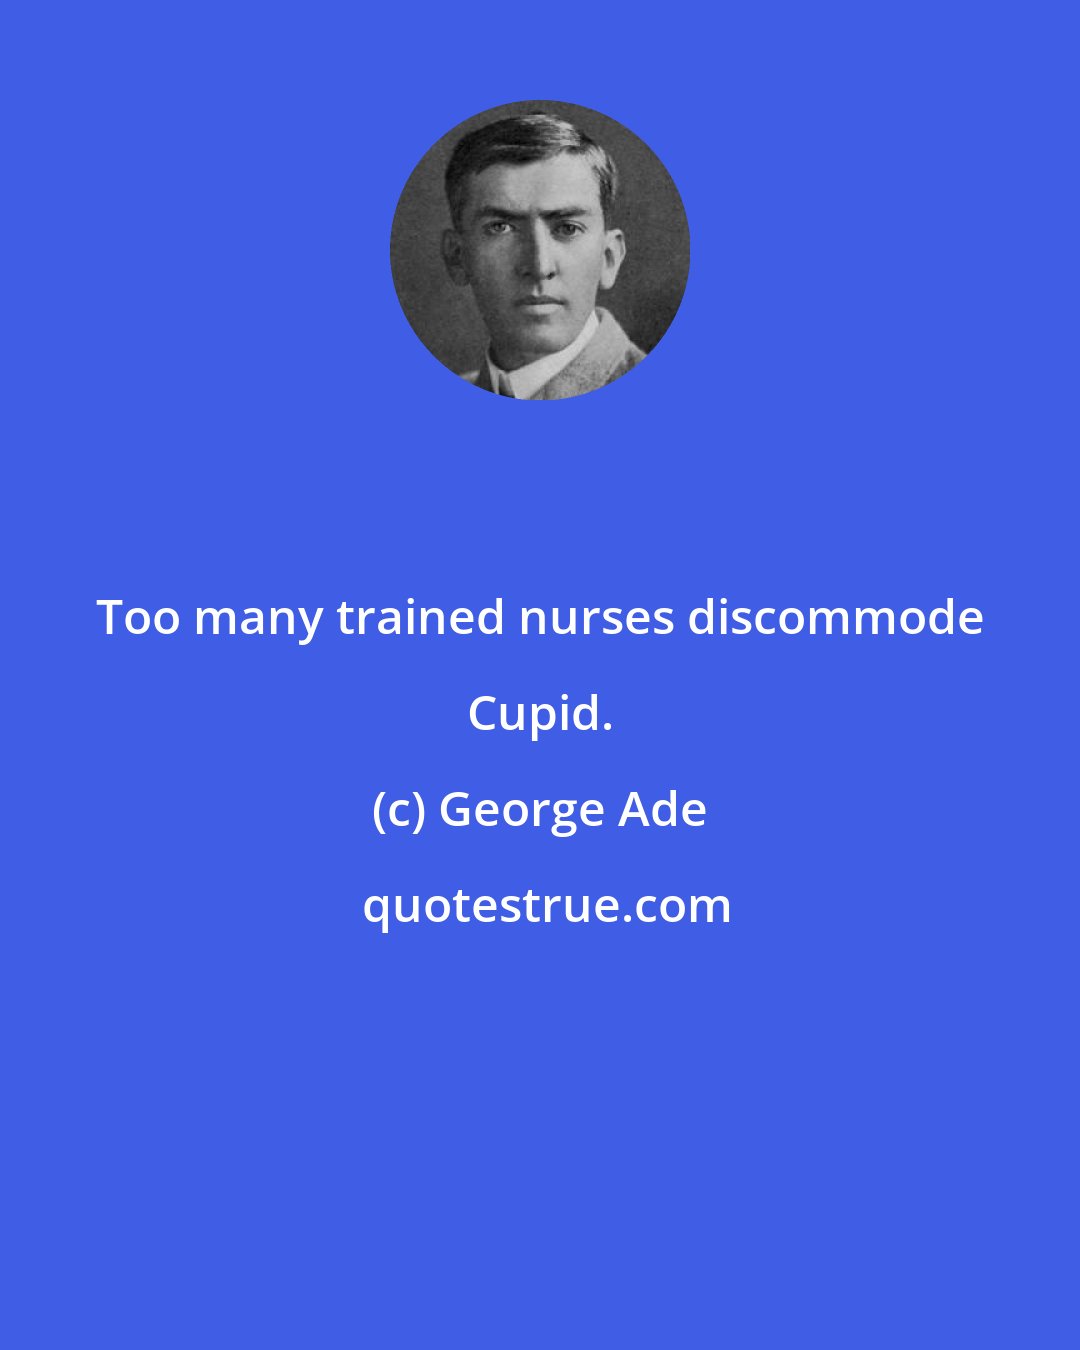 George Ade: Too many trained nurses discommode Cupid.